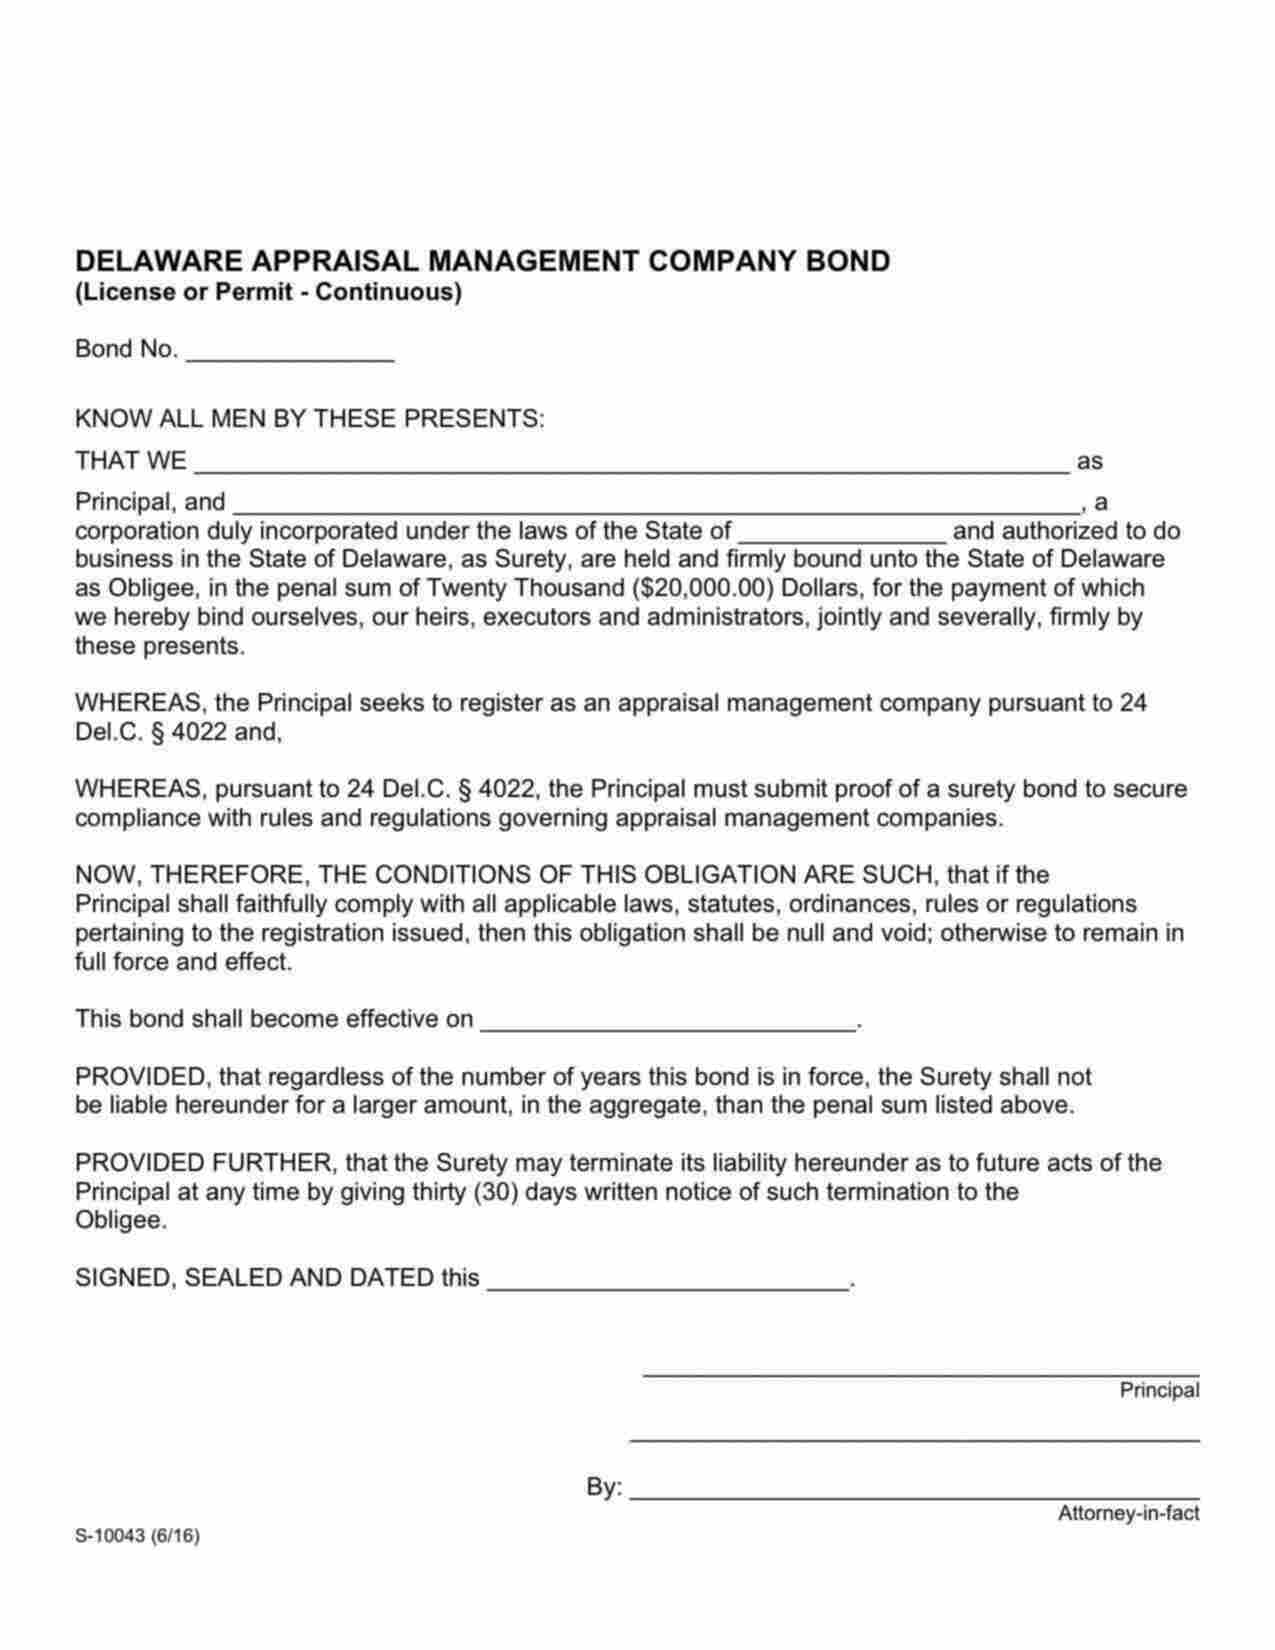 Delaware Appraisal Management Company Bond Form